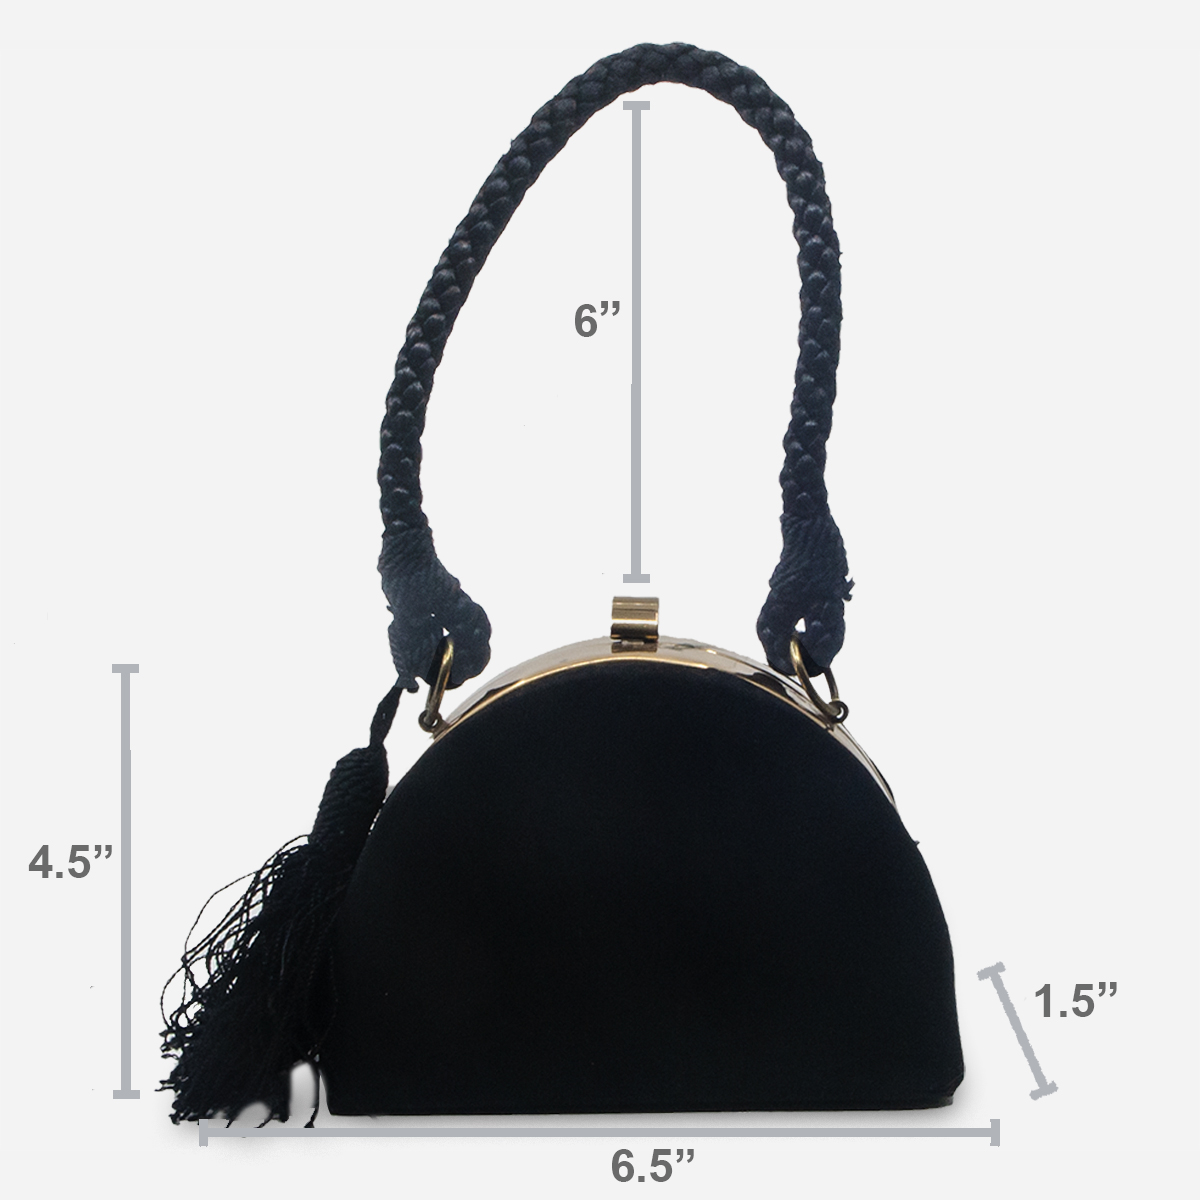 Black tassel bag size